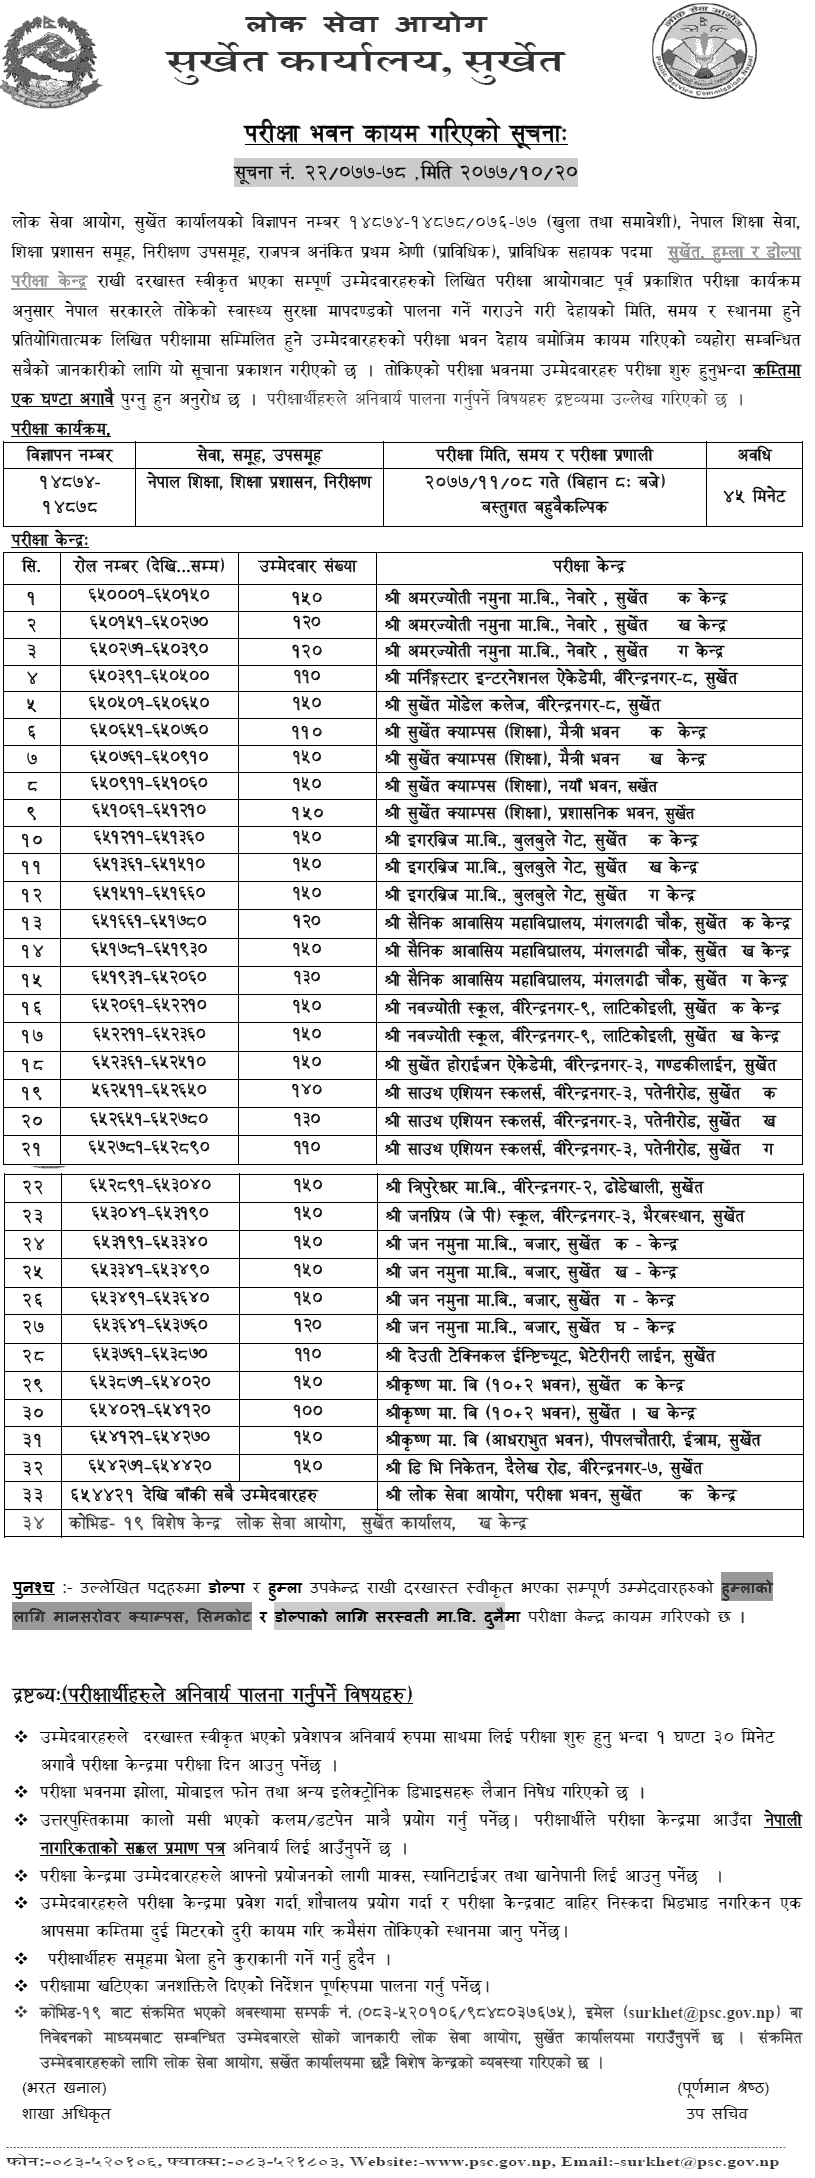 Prabidhik Sahaya (Prasa Education Group) Written Exam Center Surkhet1